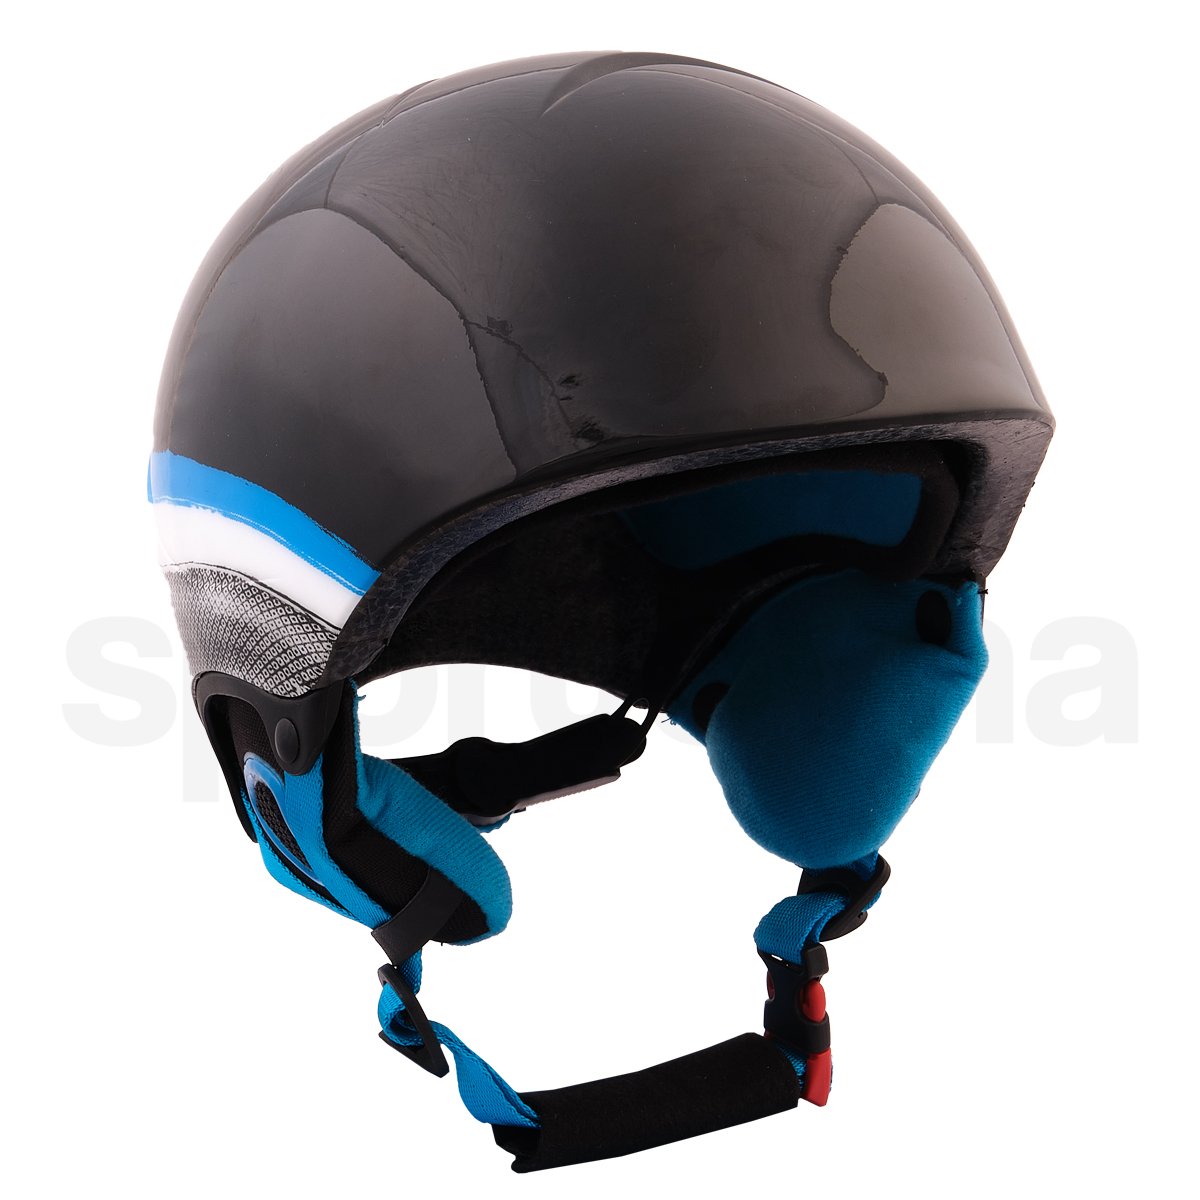 Lyžařská helma Quiksilver The Game - modrá